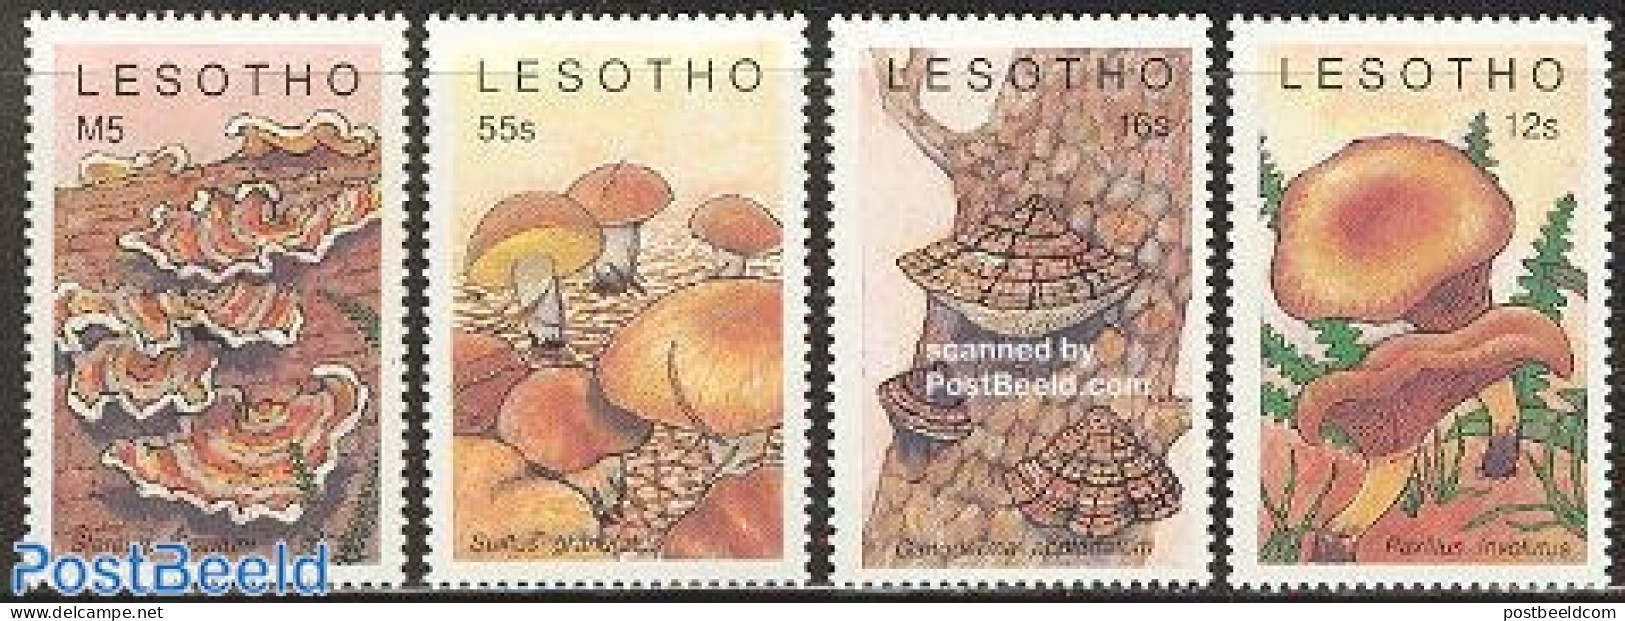 Lesotho 1989 Mushrooms 4v, Mint NH, Nature - Mushrooms - Champignons